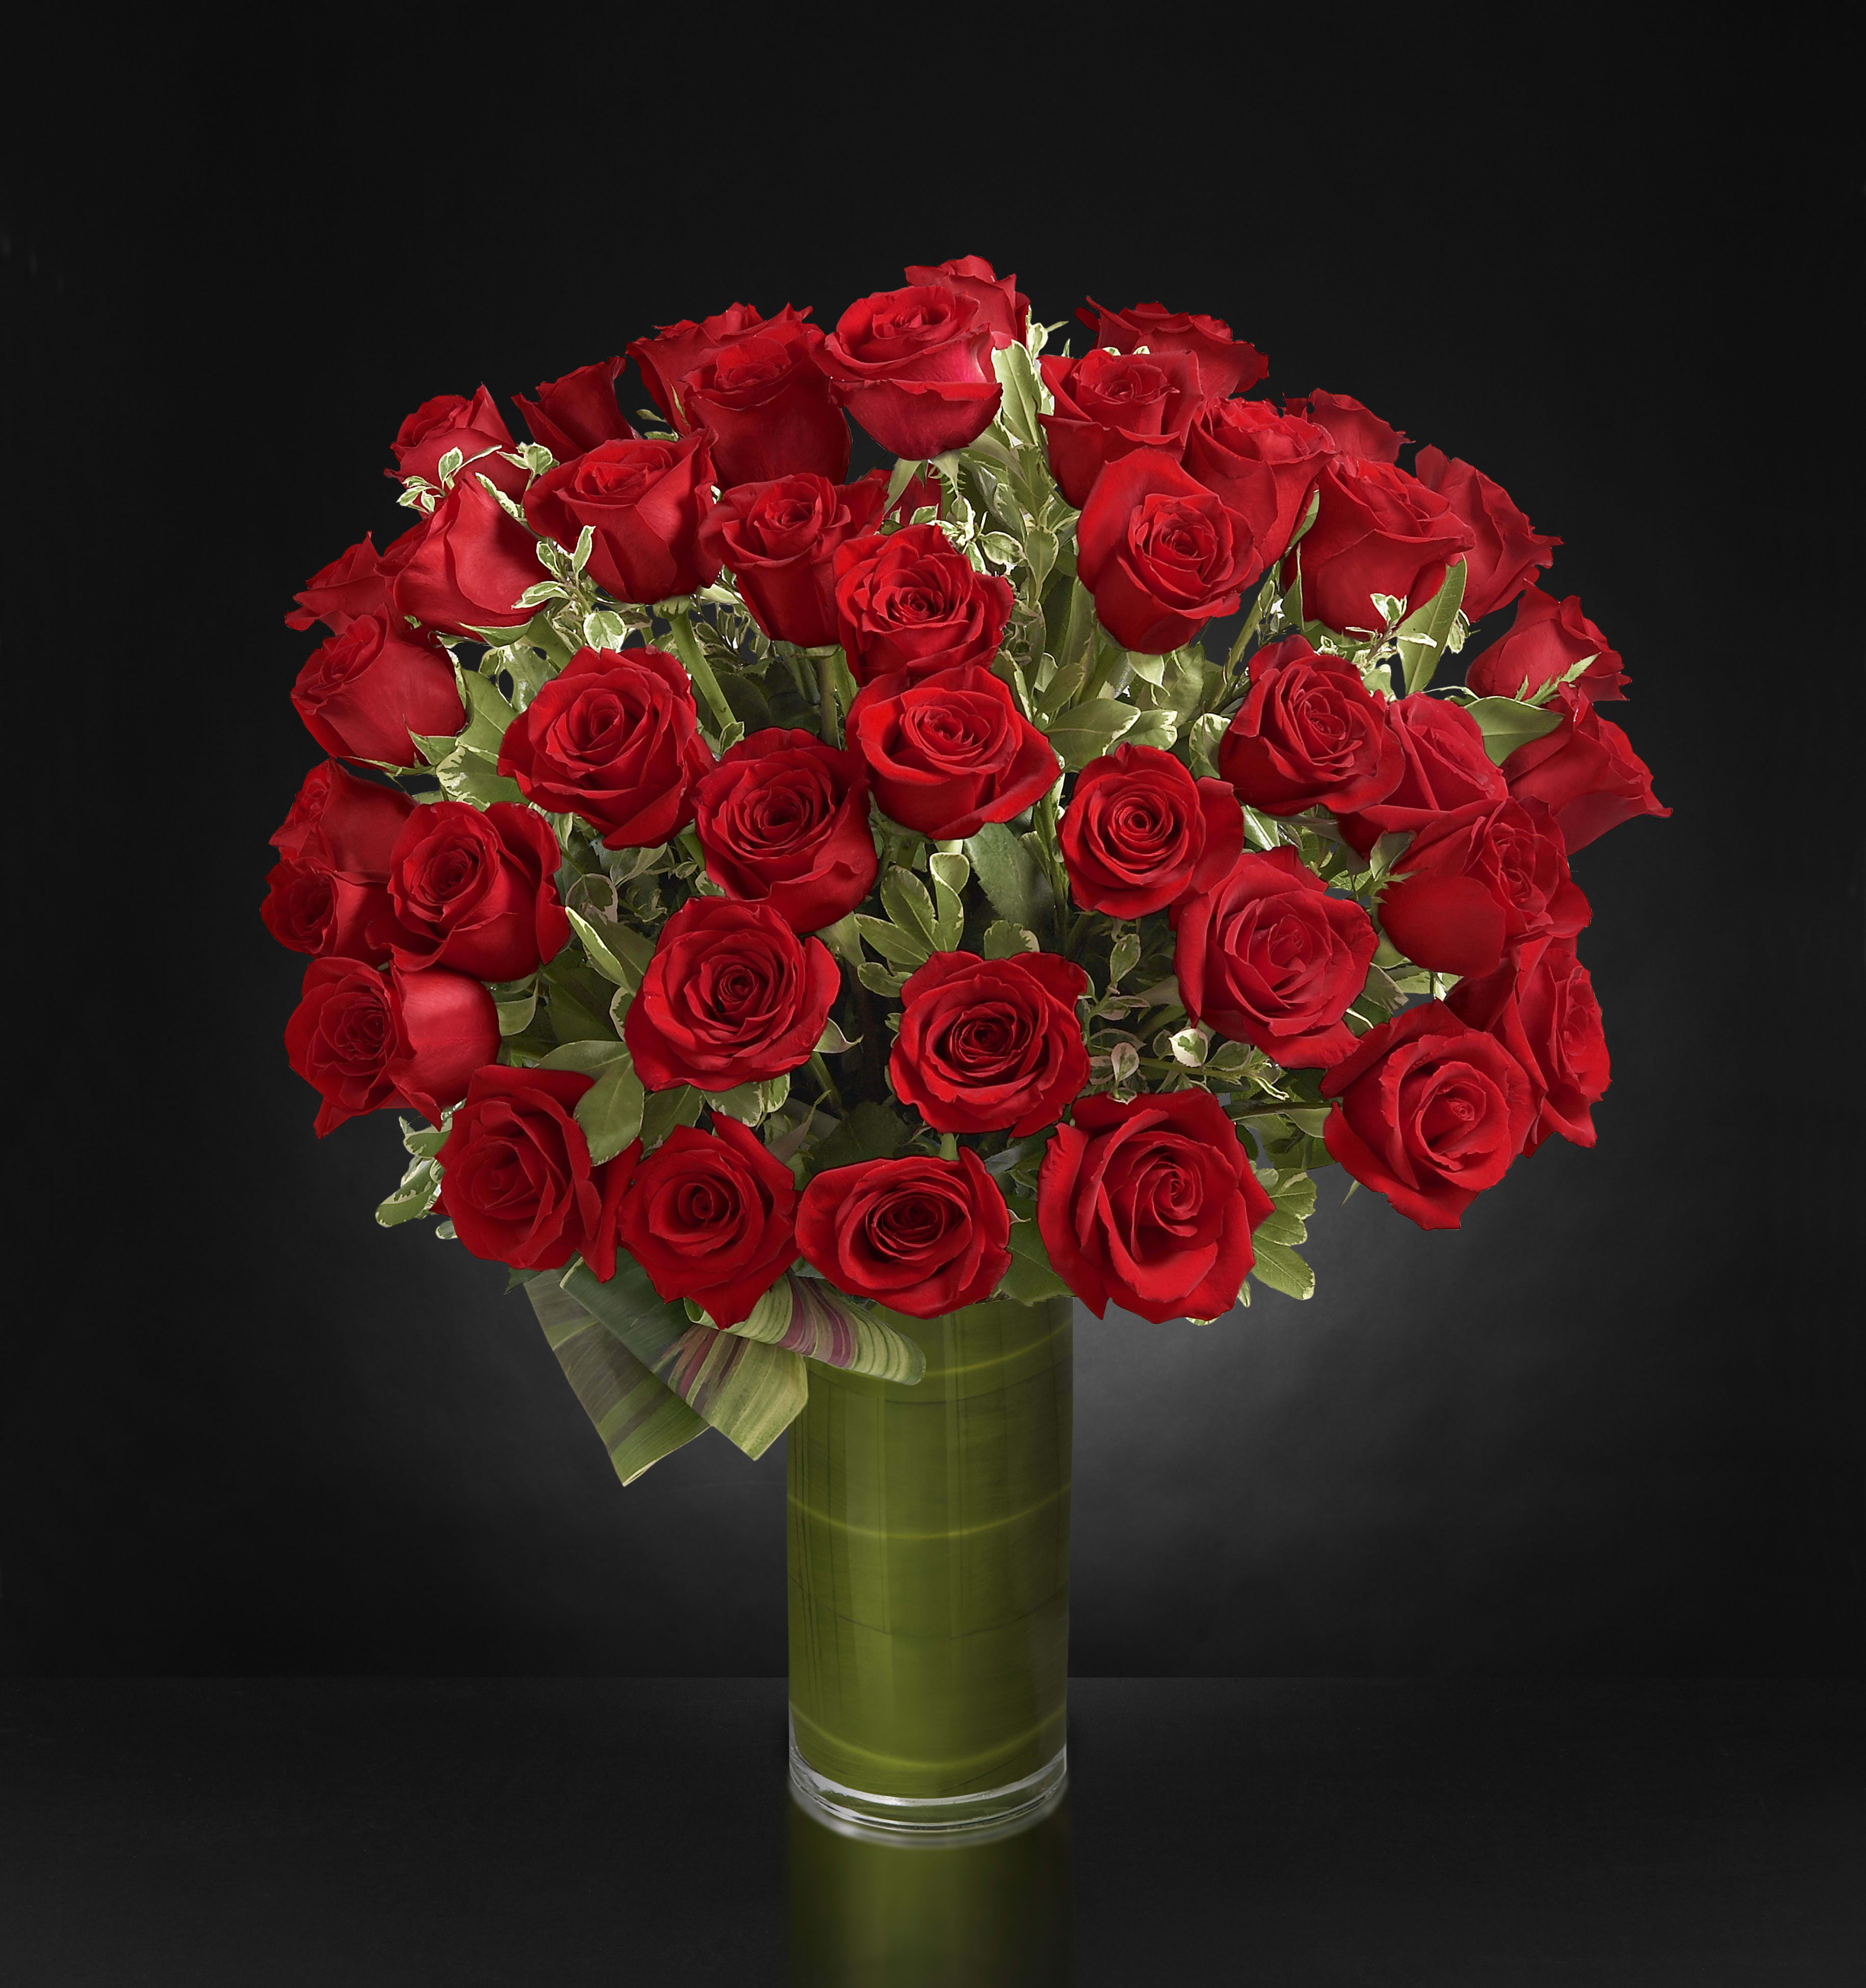 FTD Fascinating Luxury Rose Bouquet in Burbank, CA | Samuel's Florist